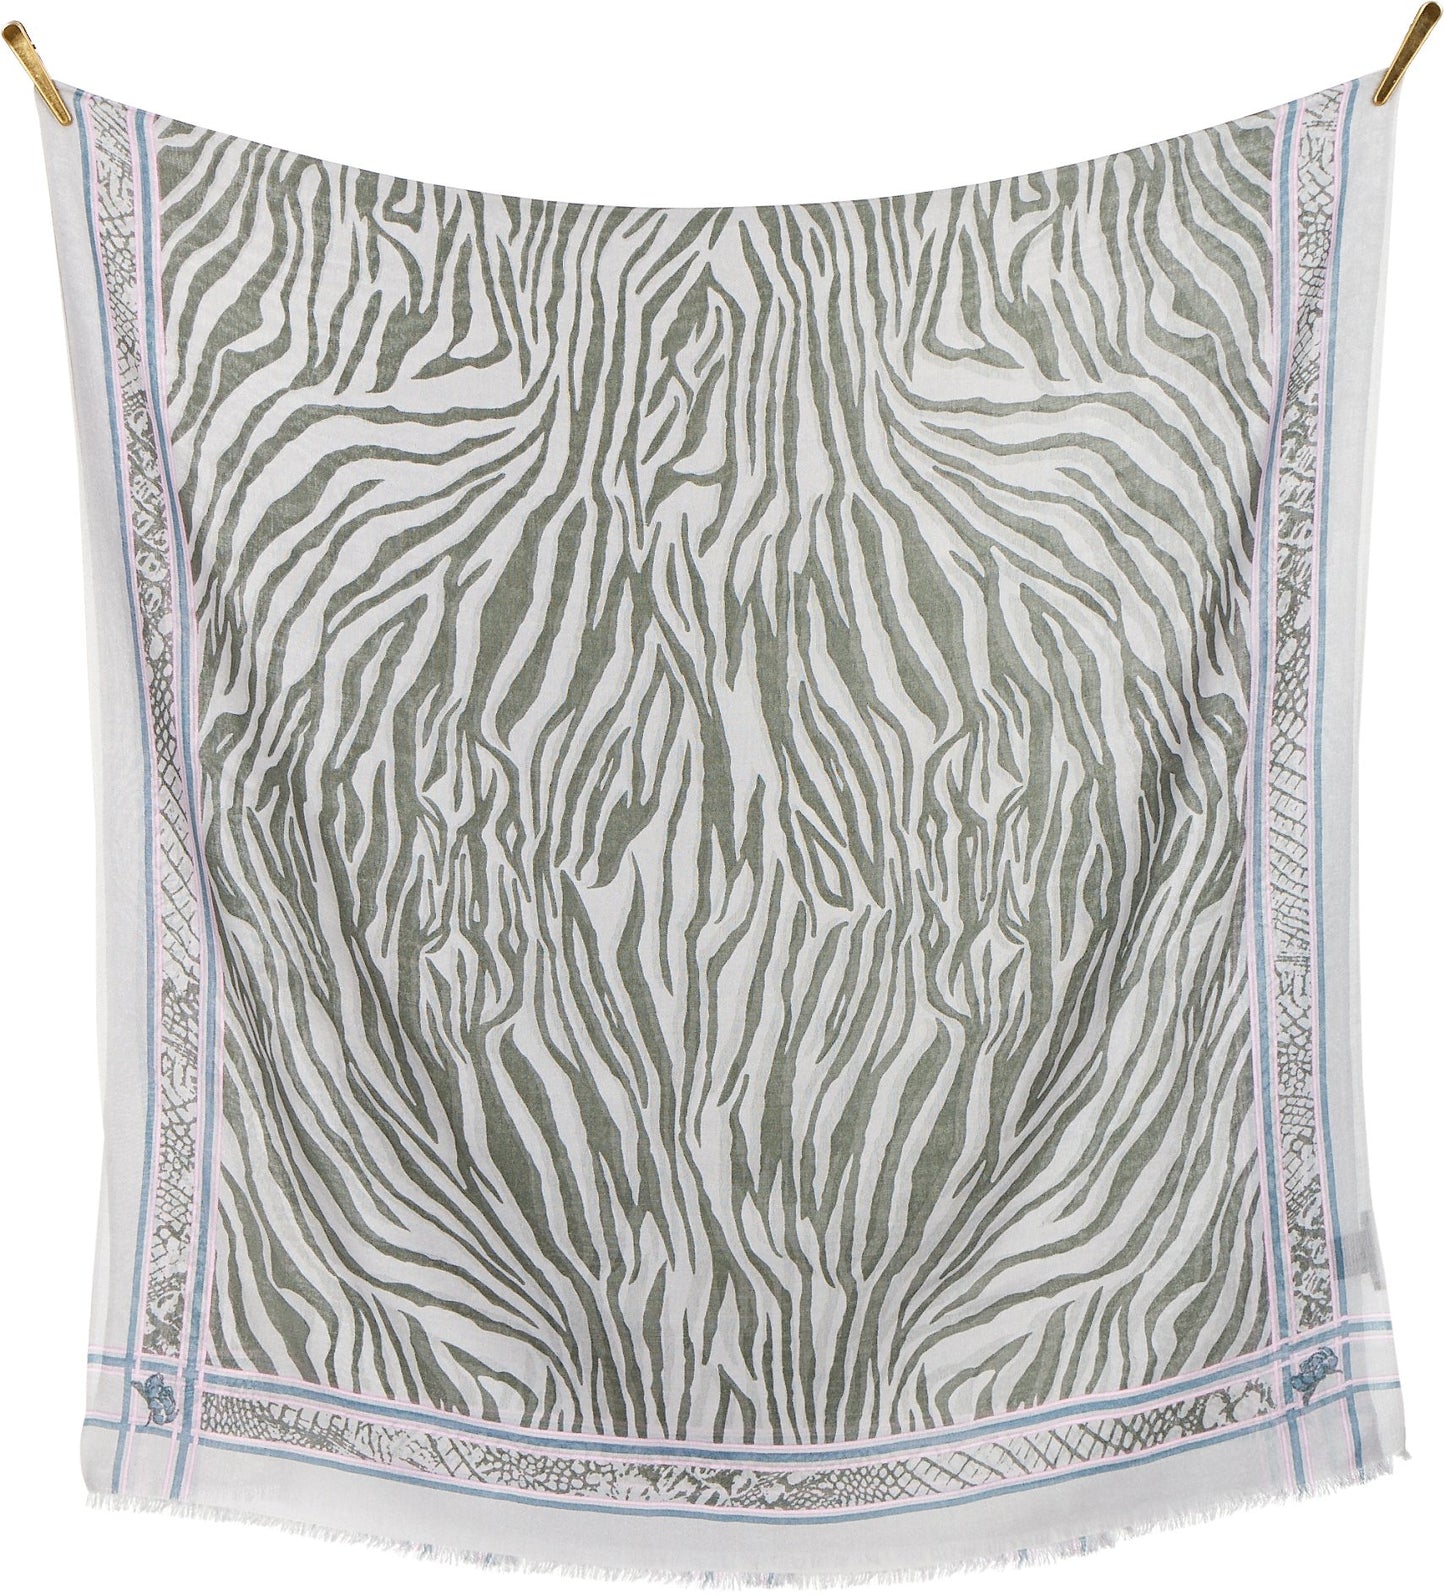 Zebra tørklæde i 50% uld og 50% silke. Olive grå. Bella Ballou